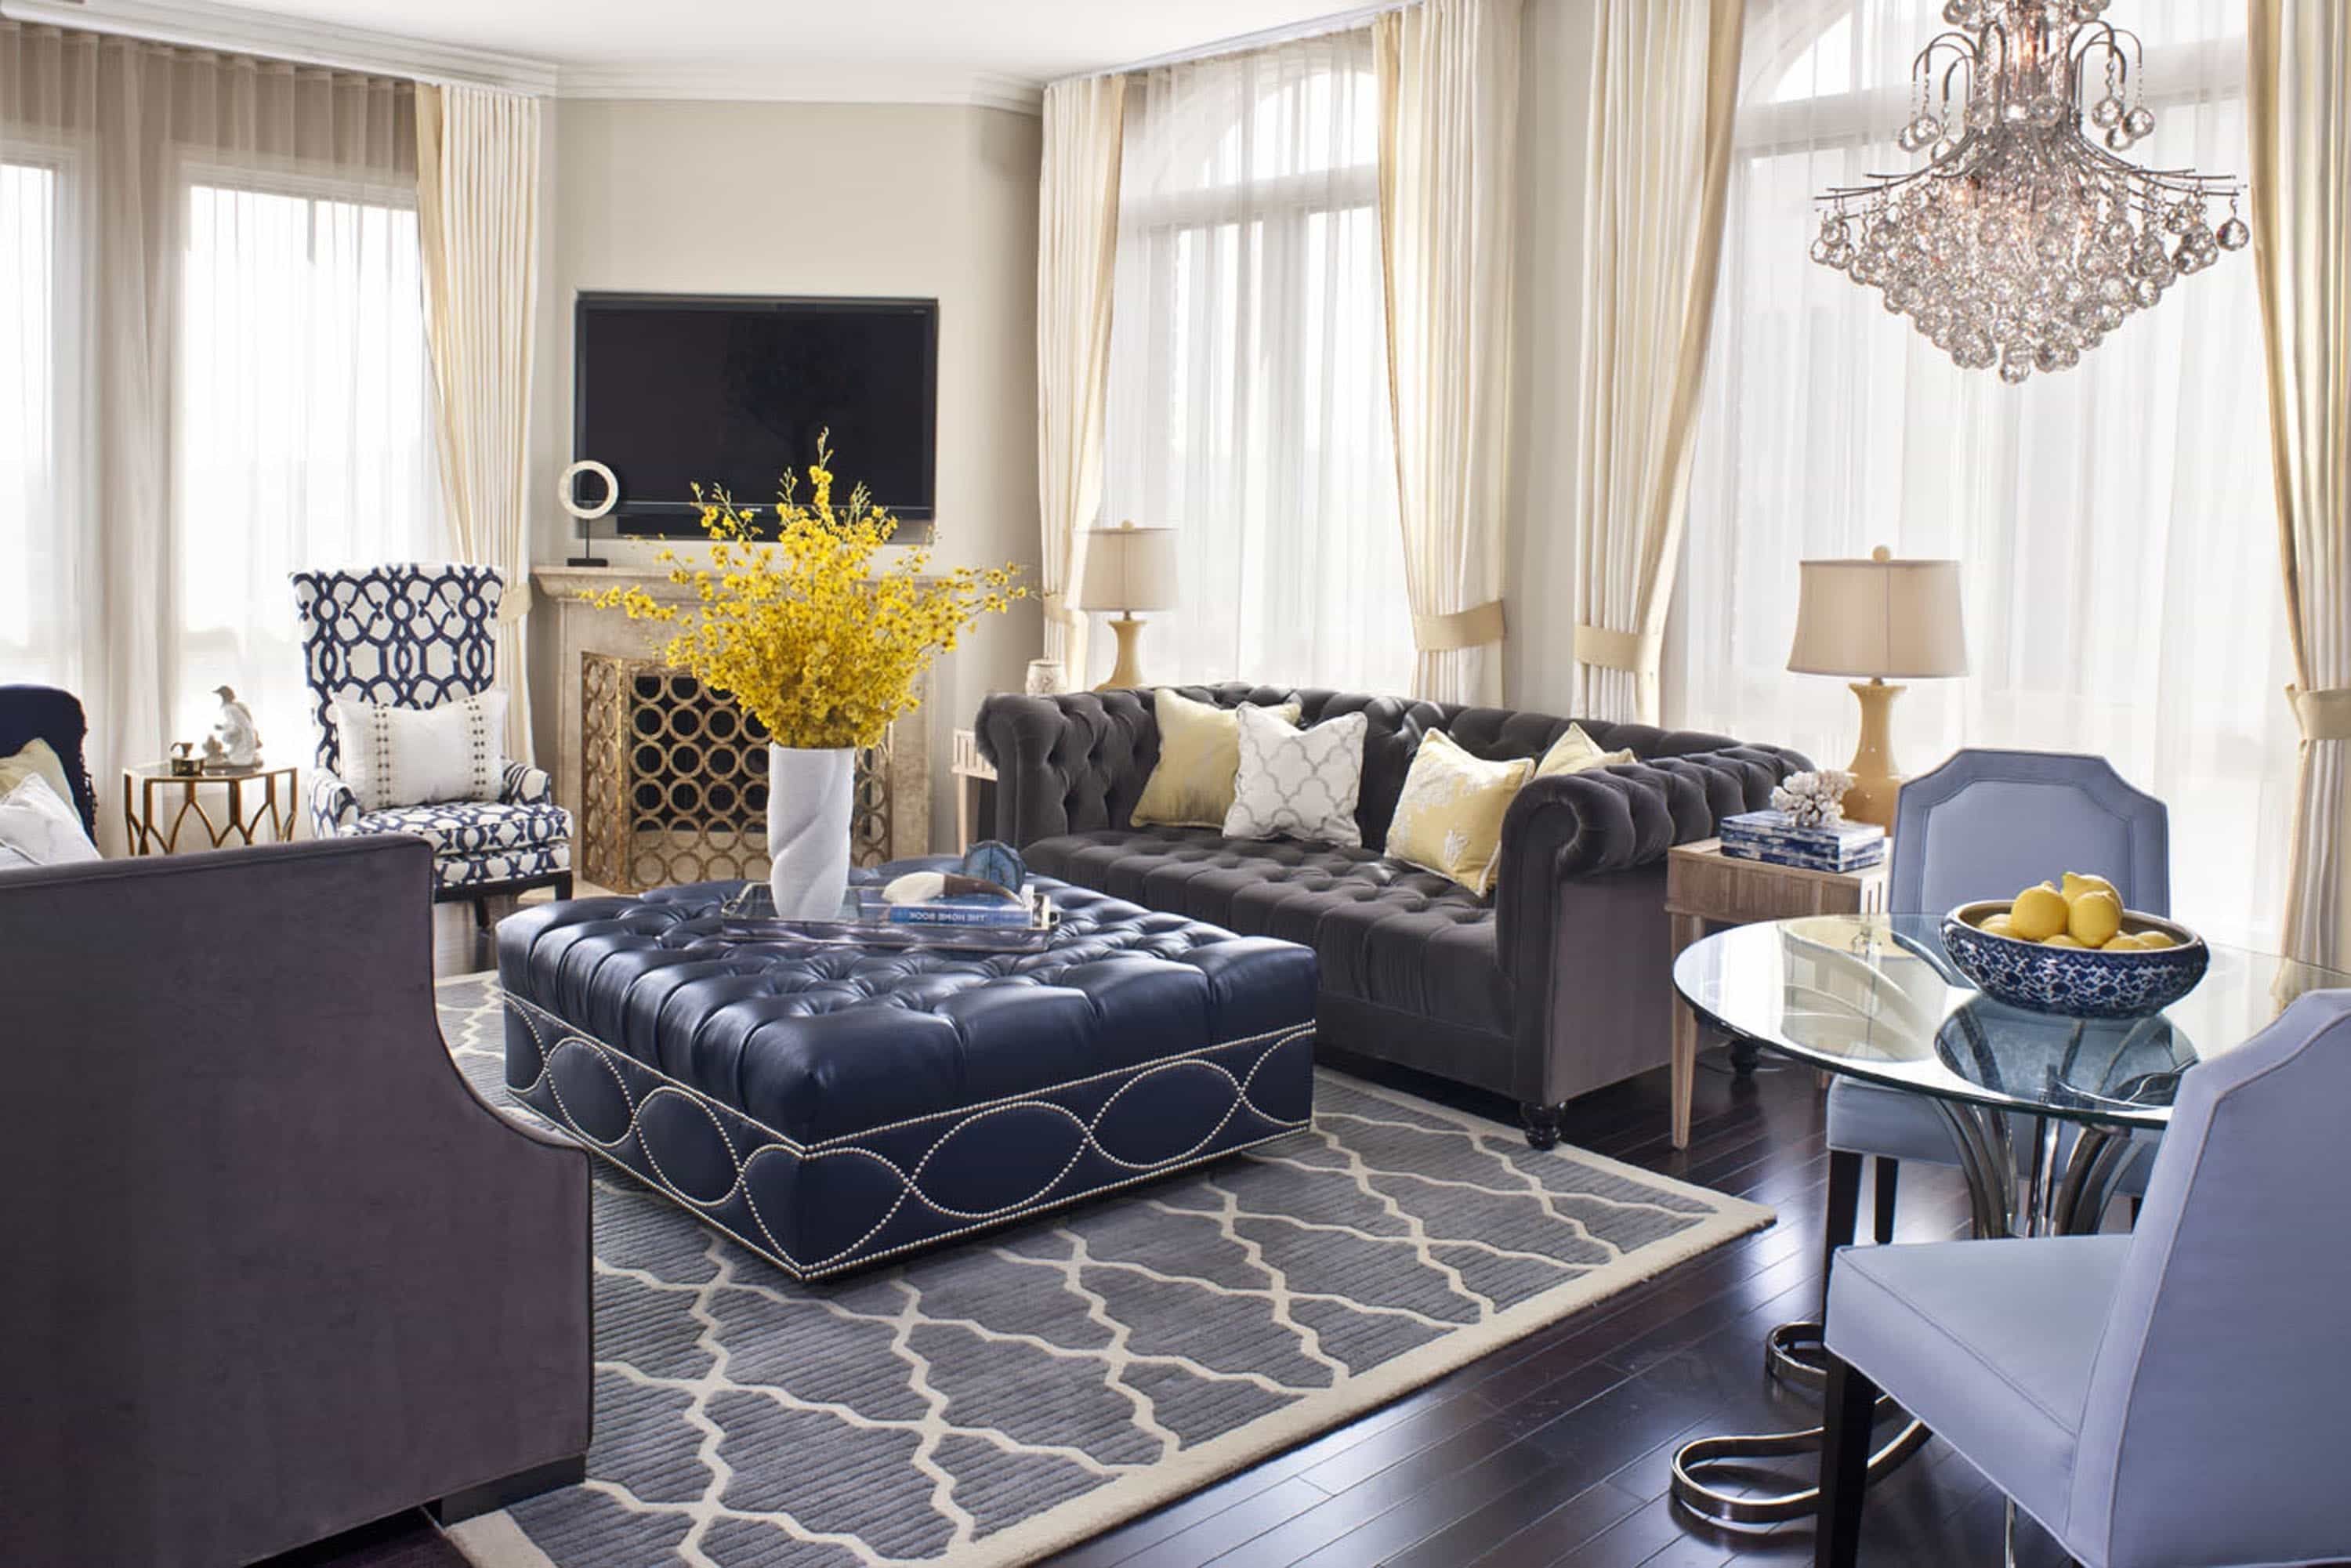 Royal Blue And Black Living Room Ideas - royal blue and black living room ideas